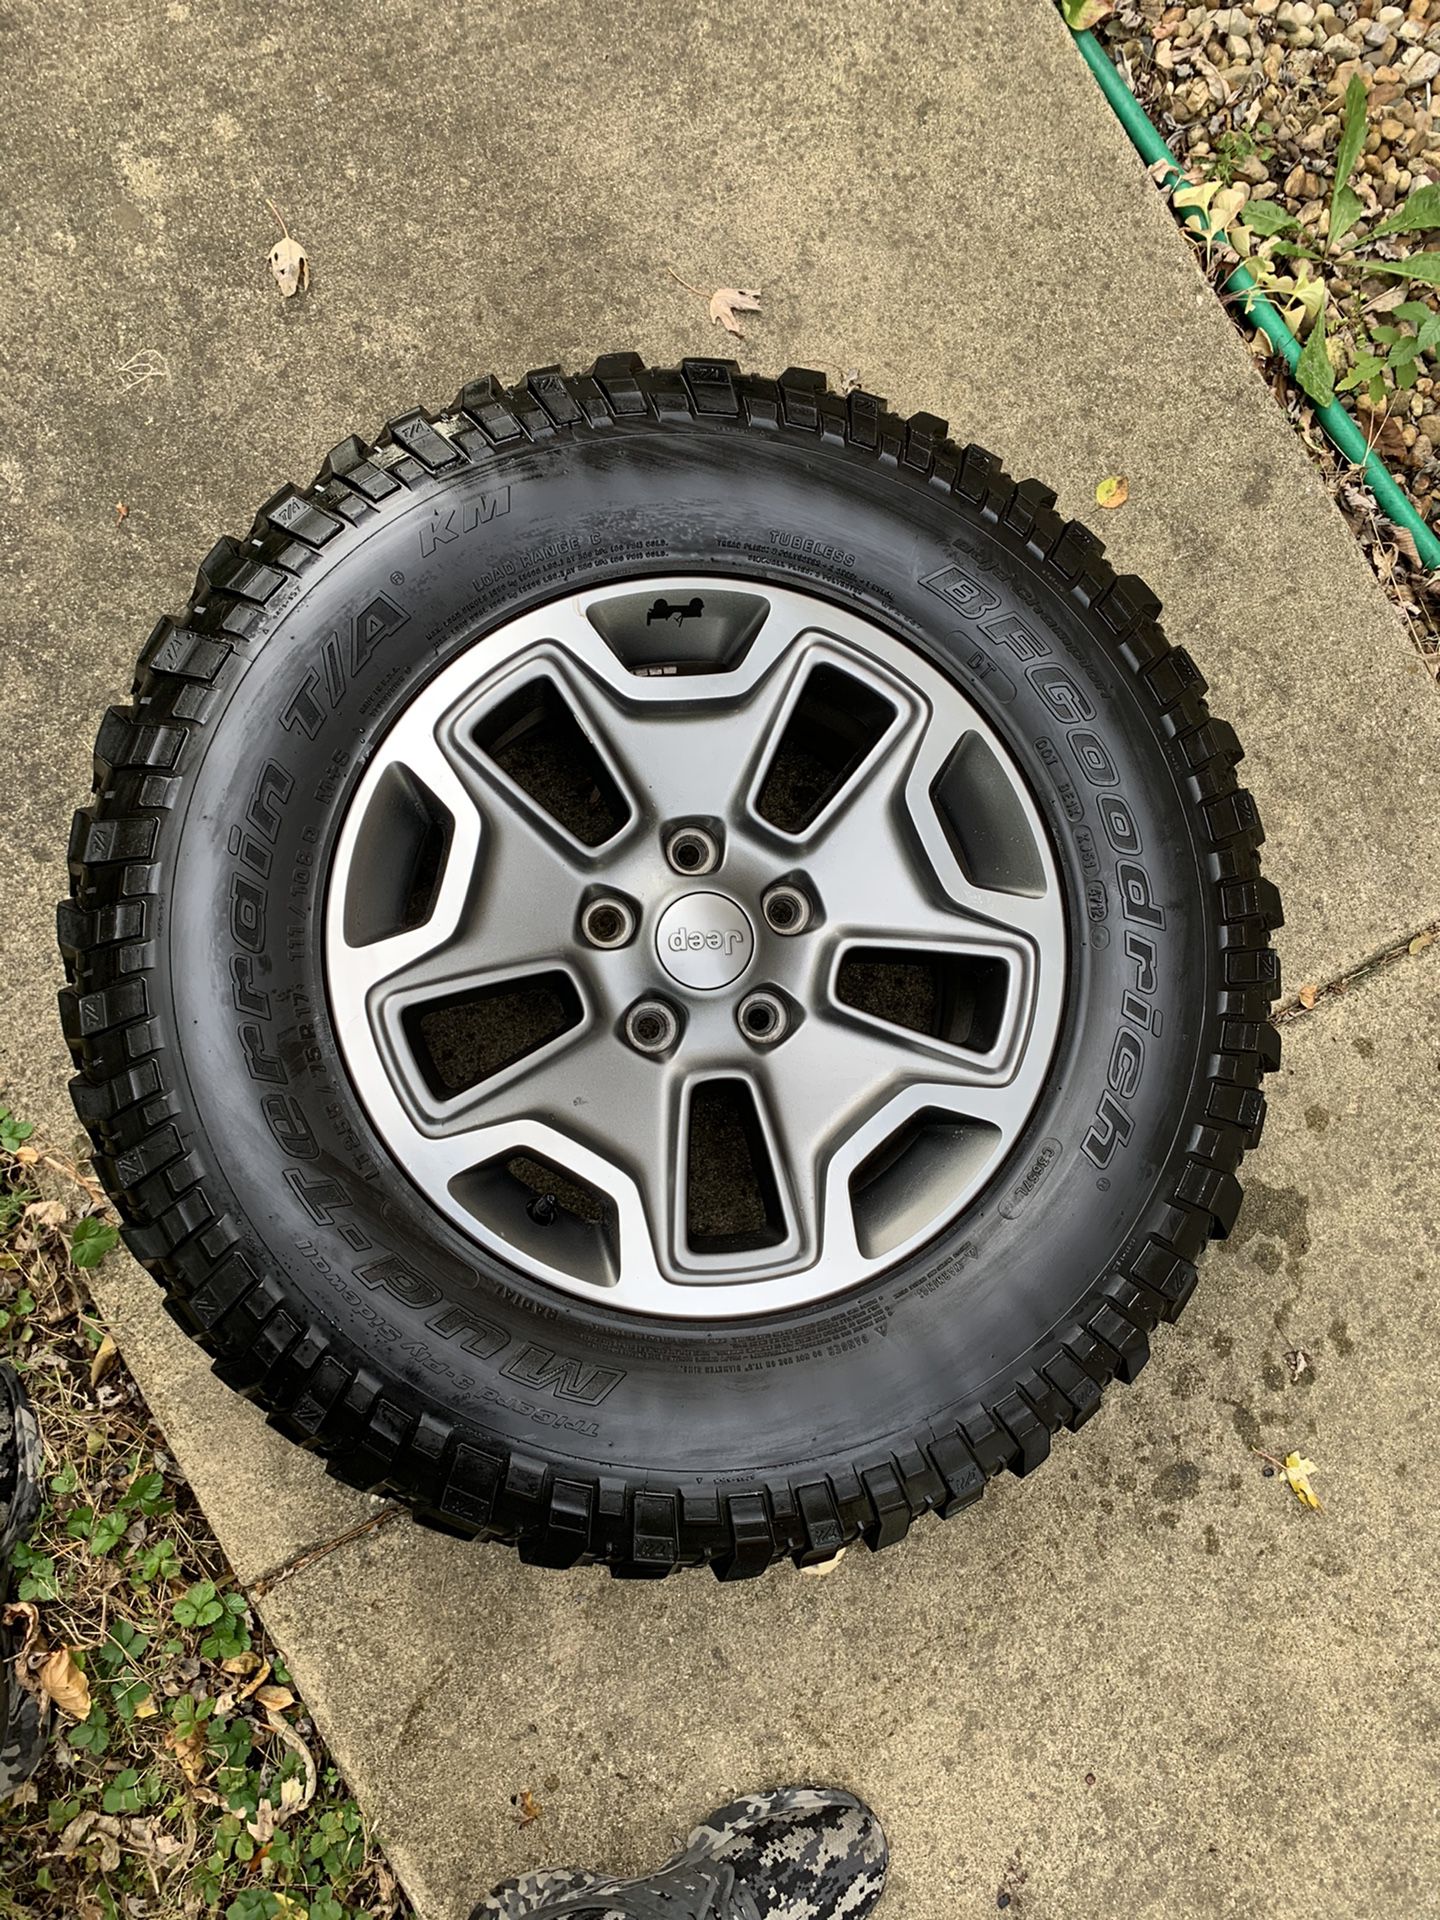 Jeep Rubicon tire and Wheel. 255/75R17